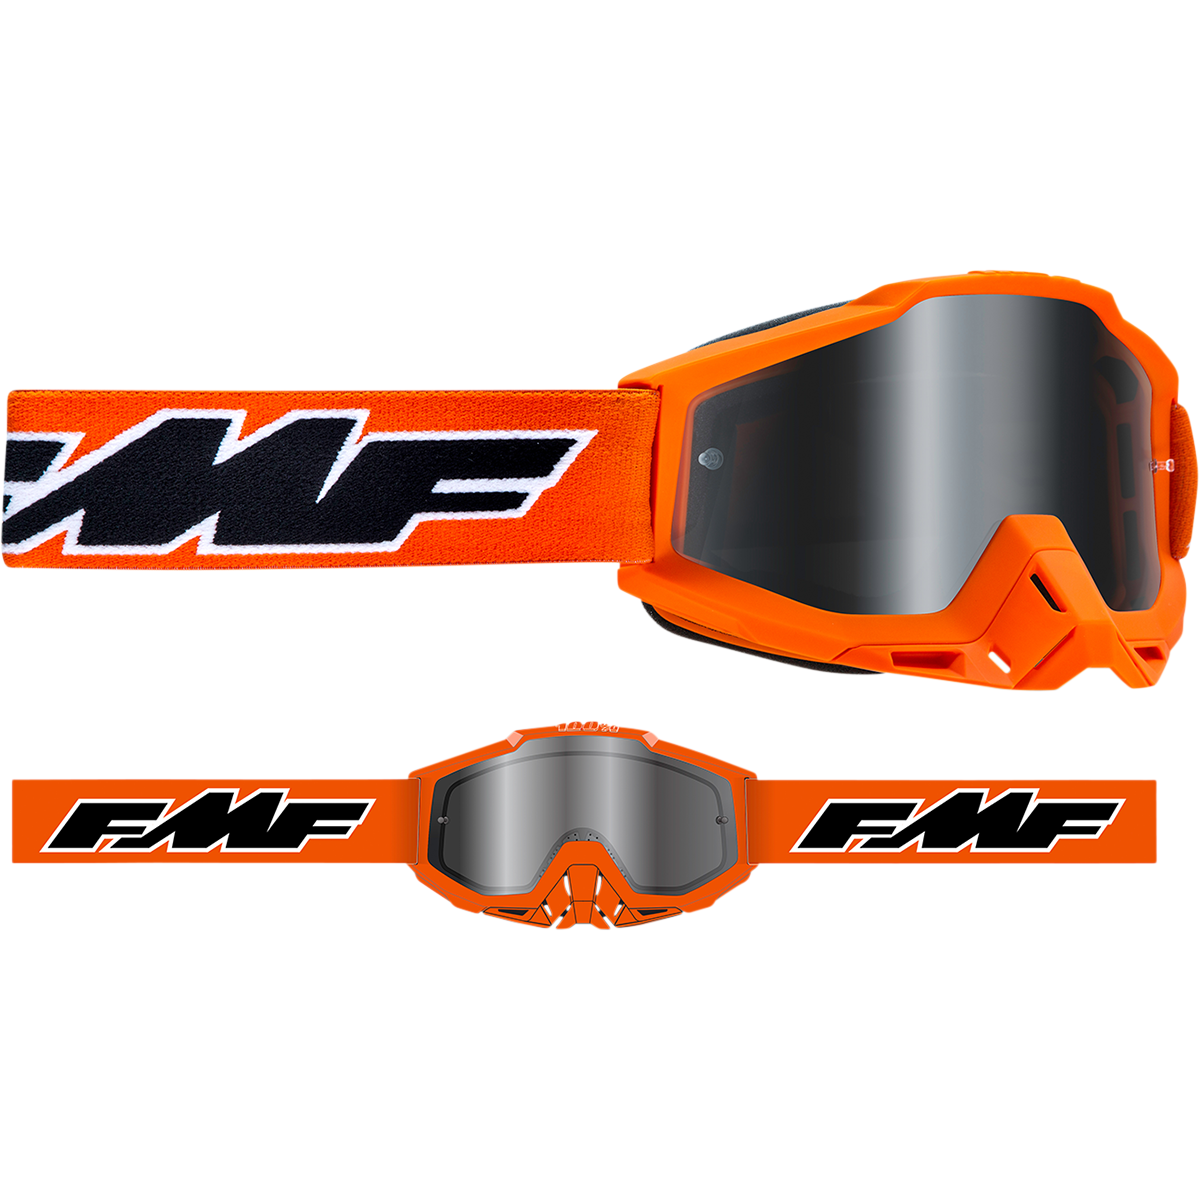 FMF VISION PowerBomb Sand Goggles - Rocket - Orange - Smoke F